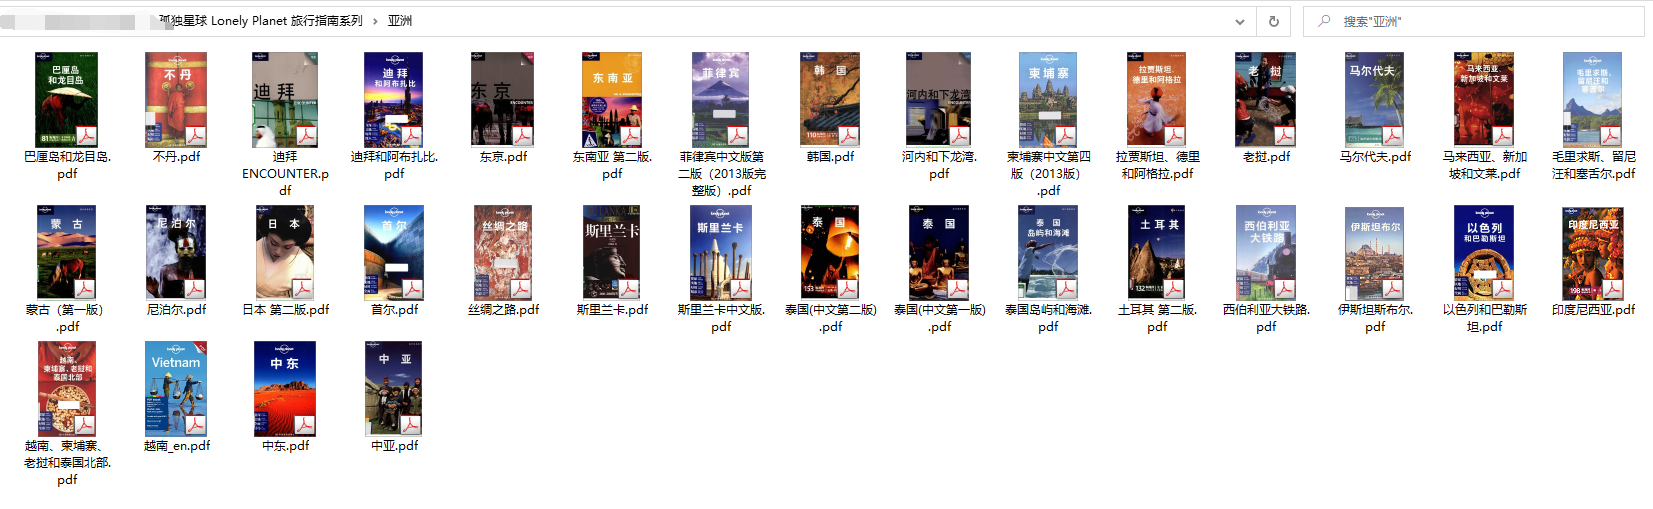 Lonely Planet旅行指南系列 PDF电子版